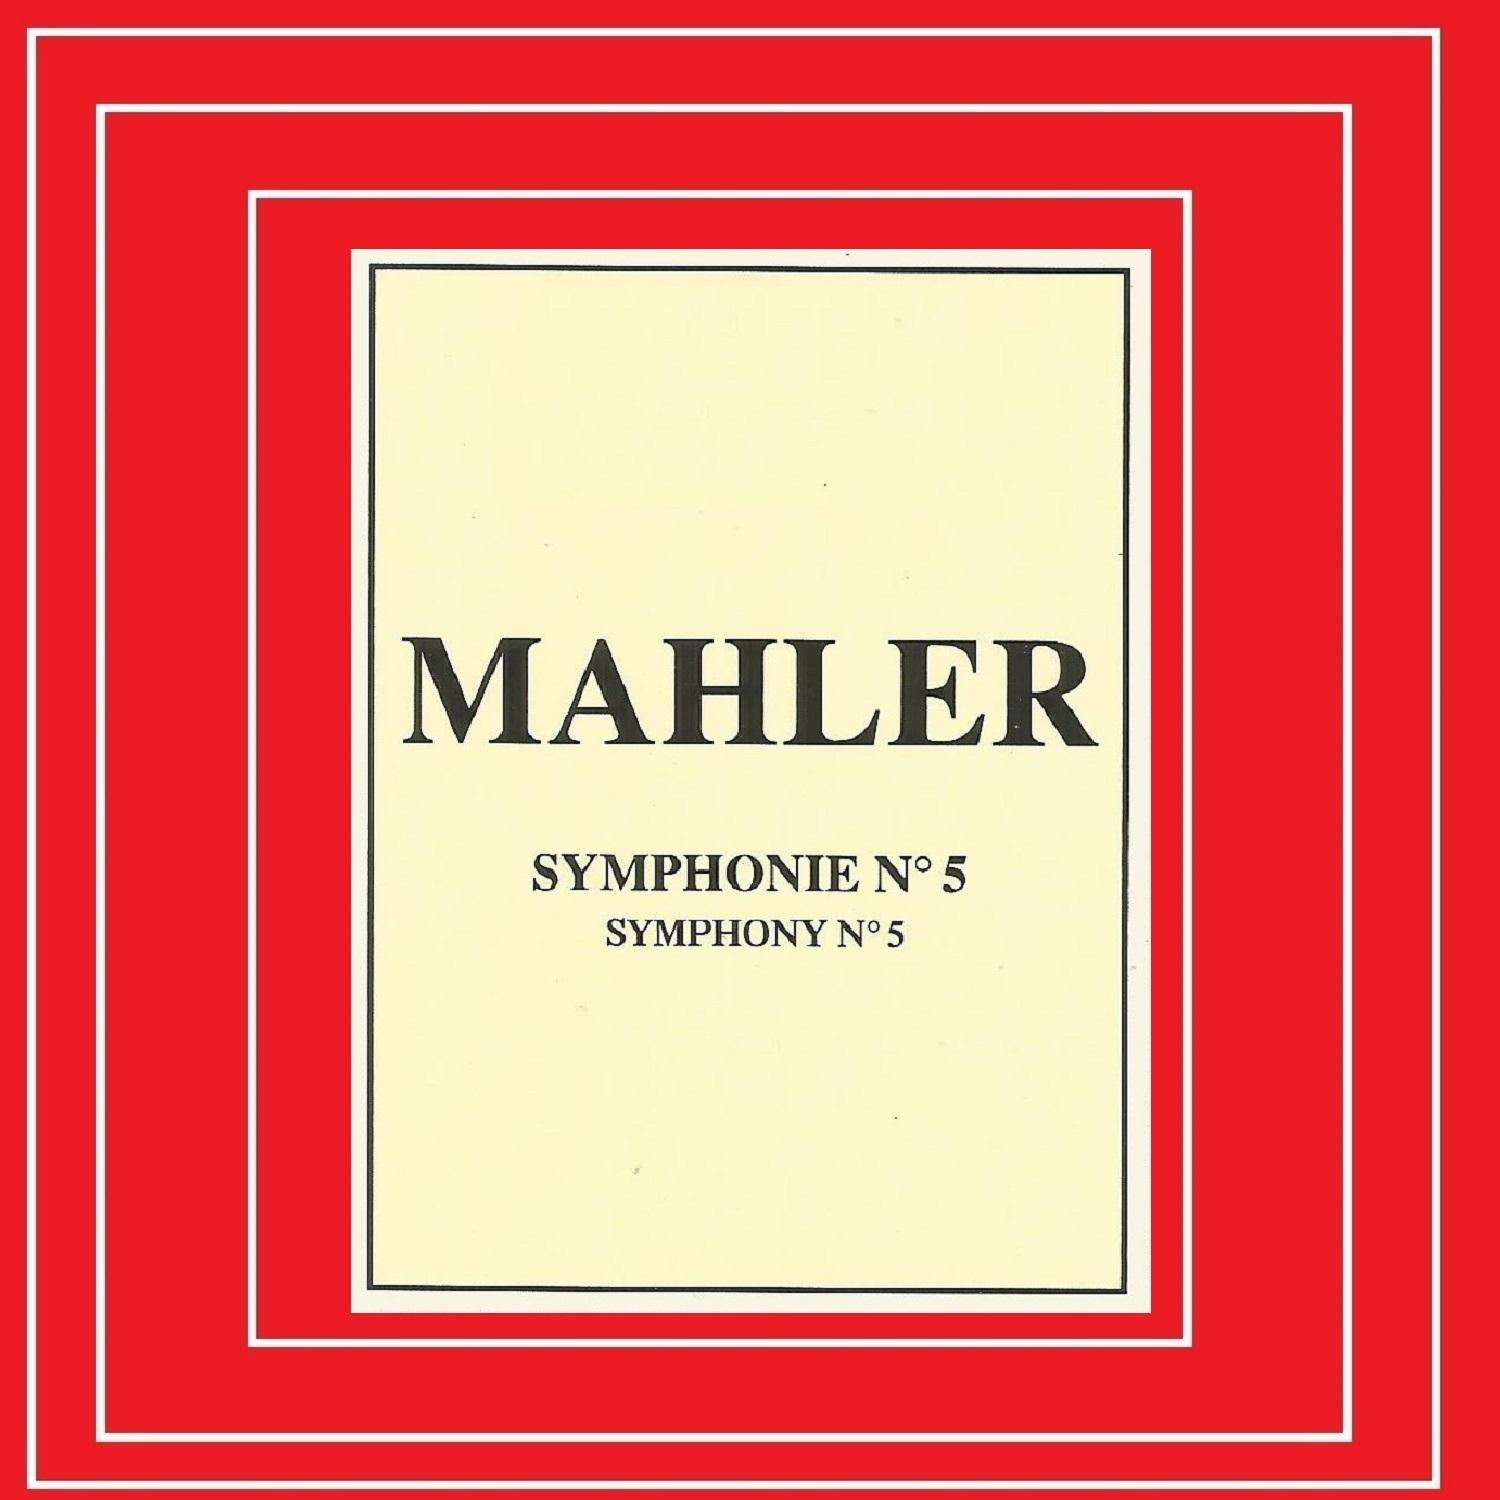 Mahler  Symphonie N 5